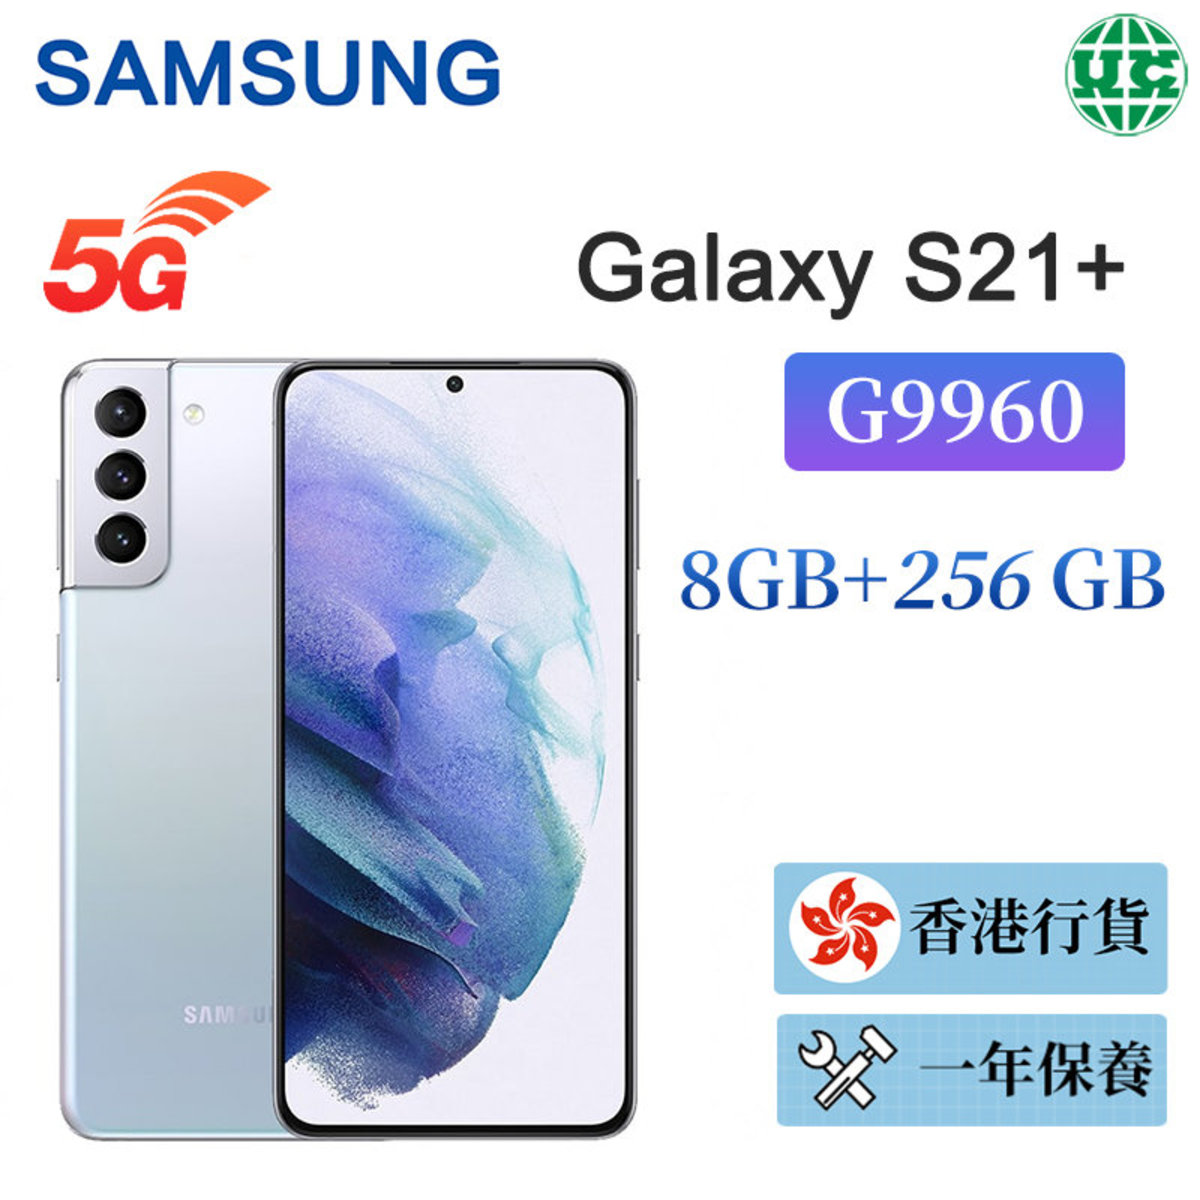 Samsung | Galaxy S21 + PLUS 5G G9960 (8GB + 256GB) - sliver [Hong